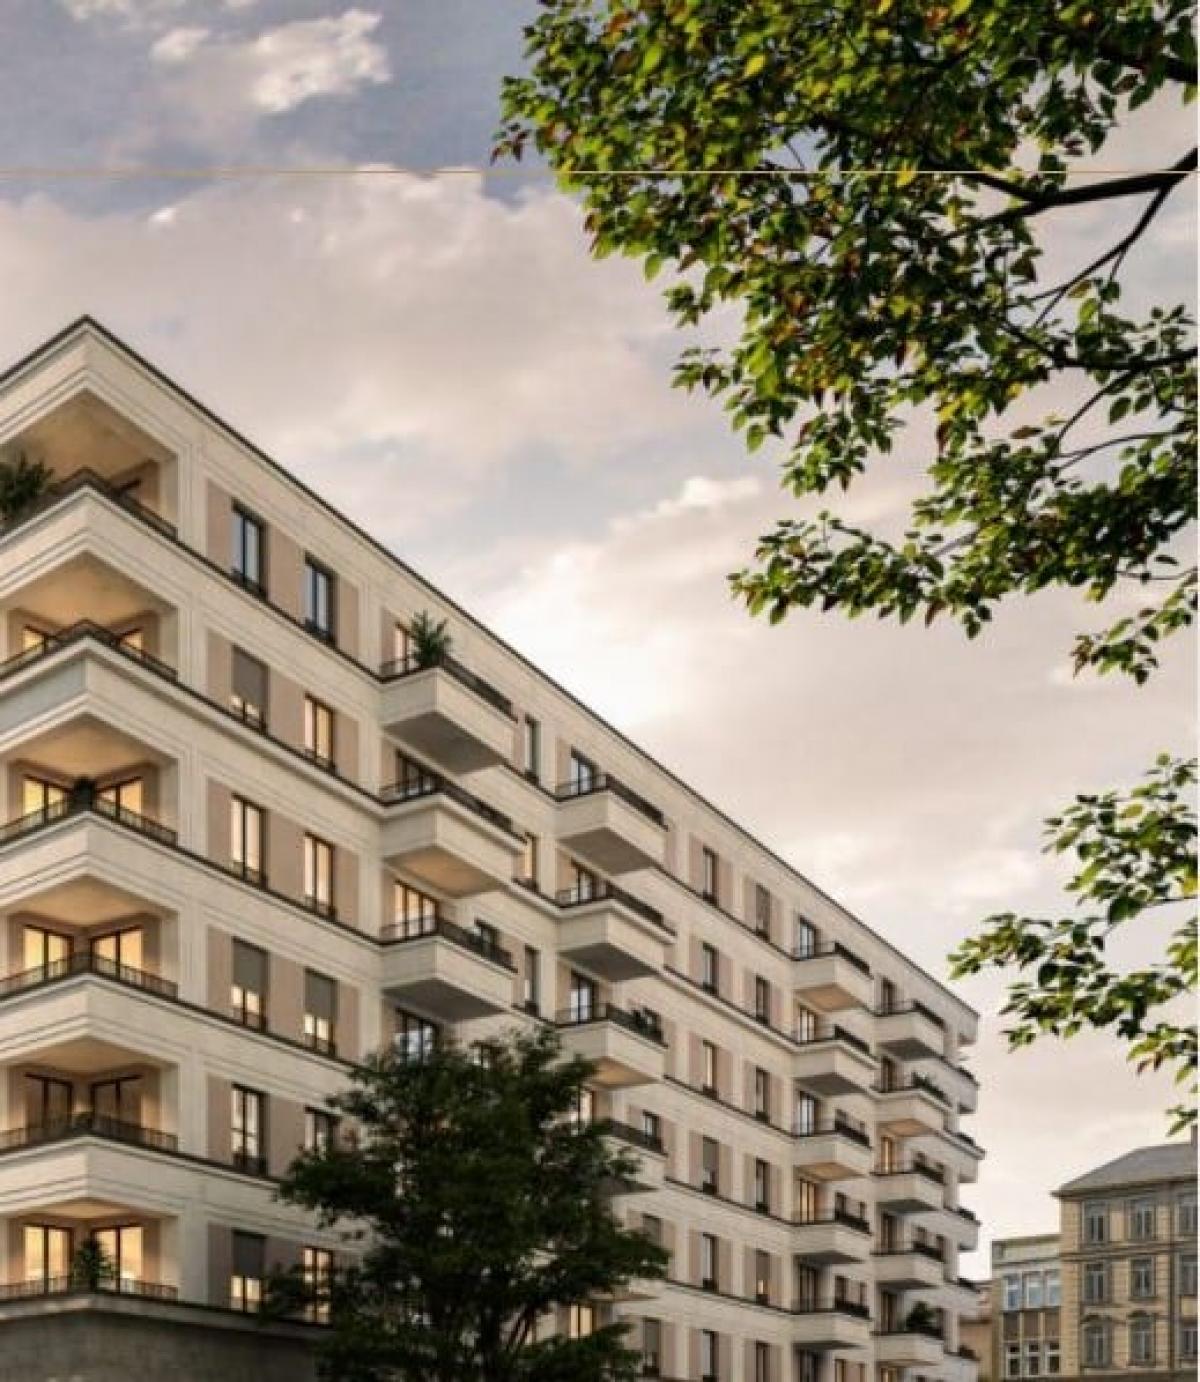 Picture of Apartment For Sale in Friedrichshain, Brandenburg, Germany